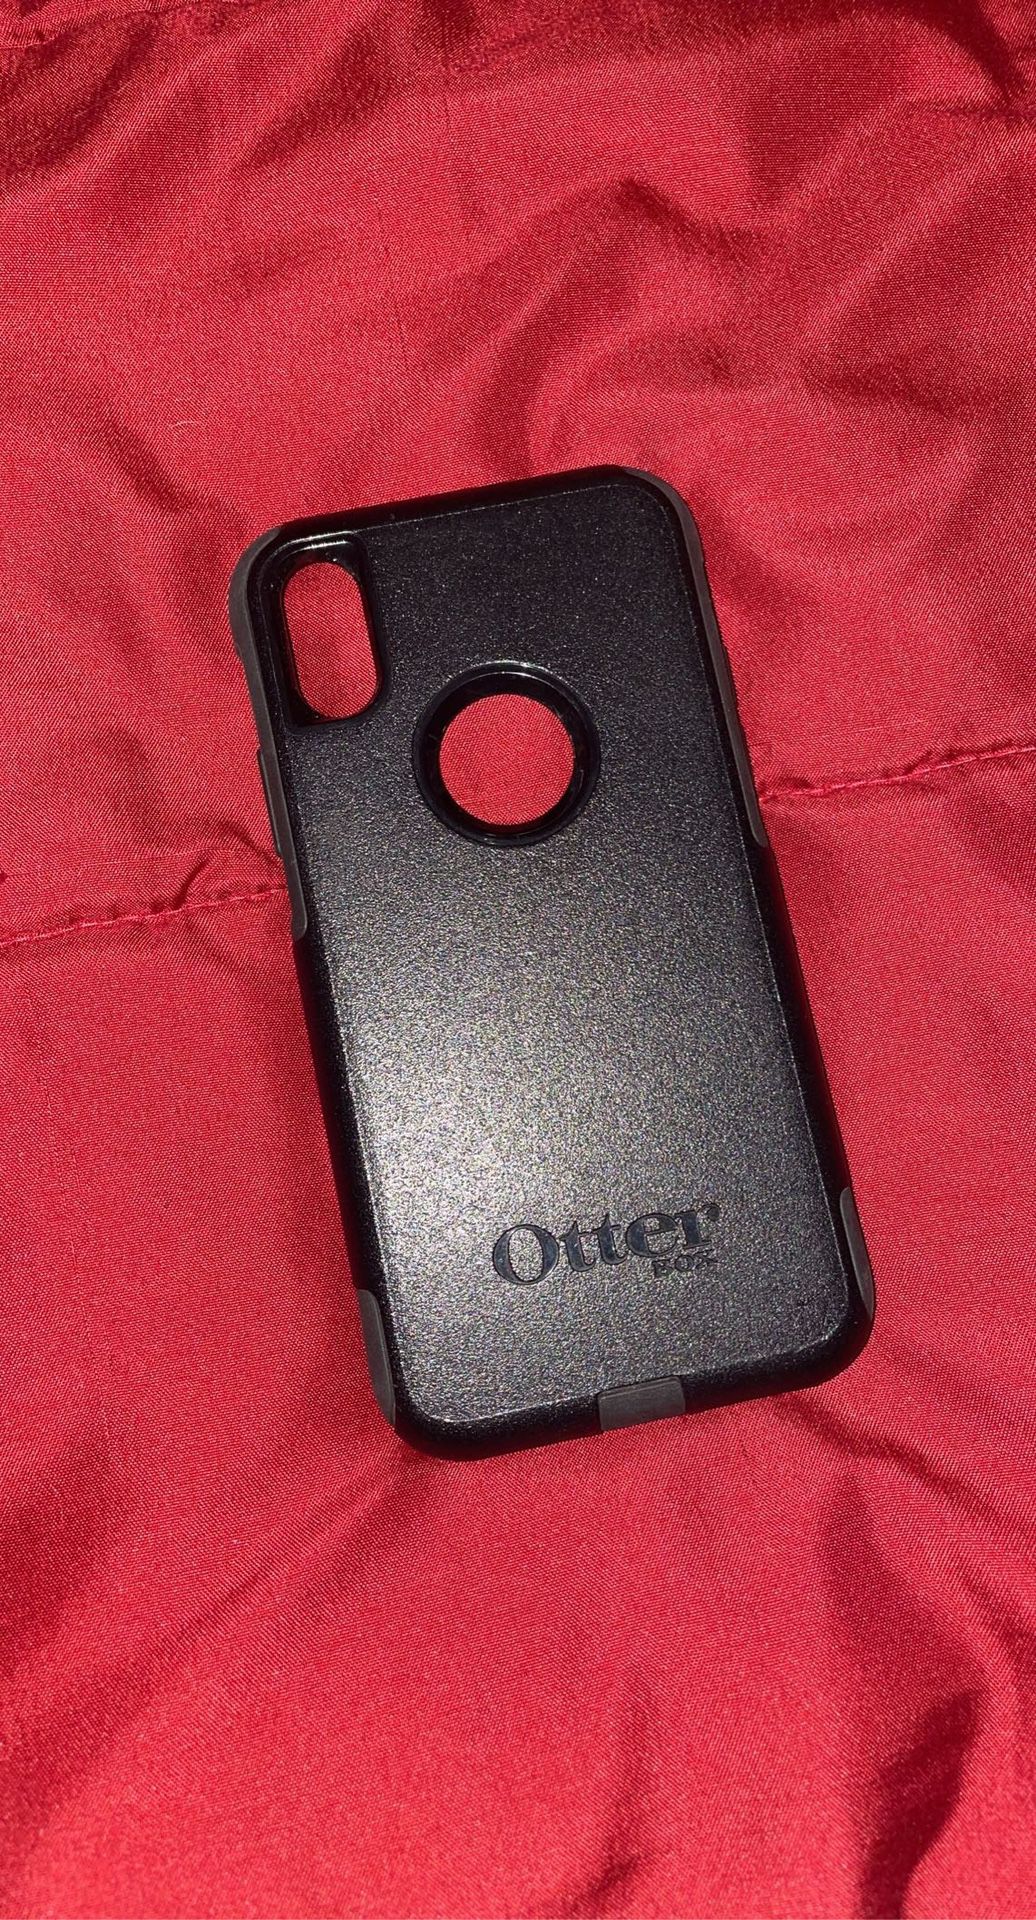 iPhone X Otter Box